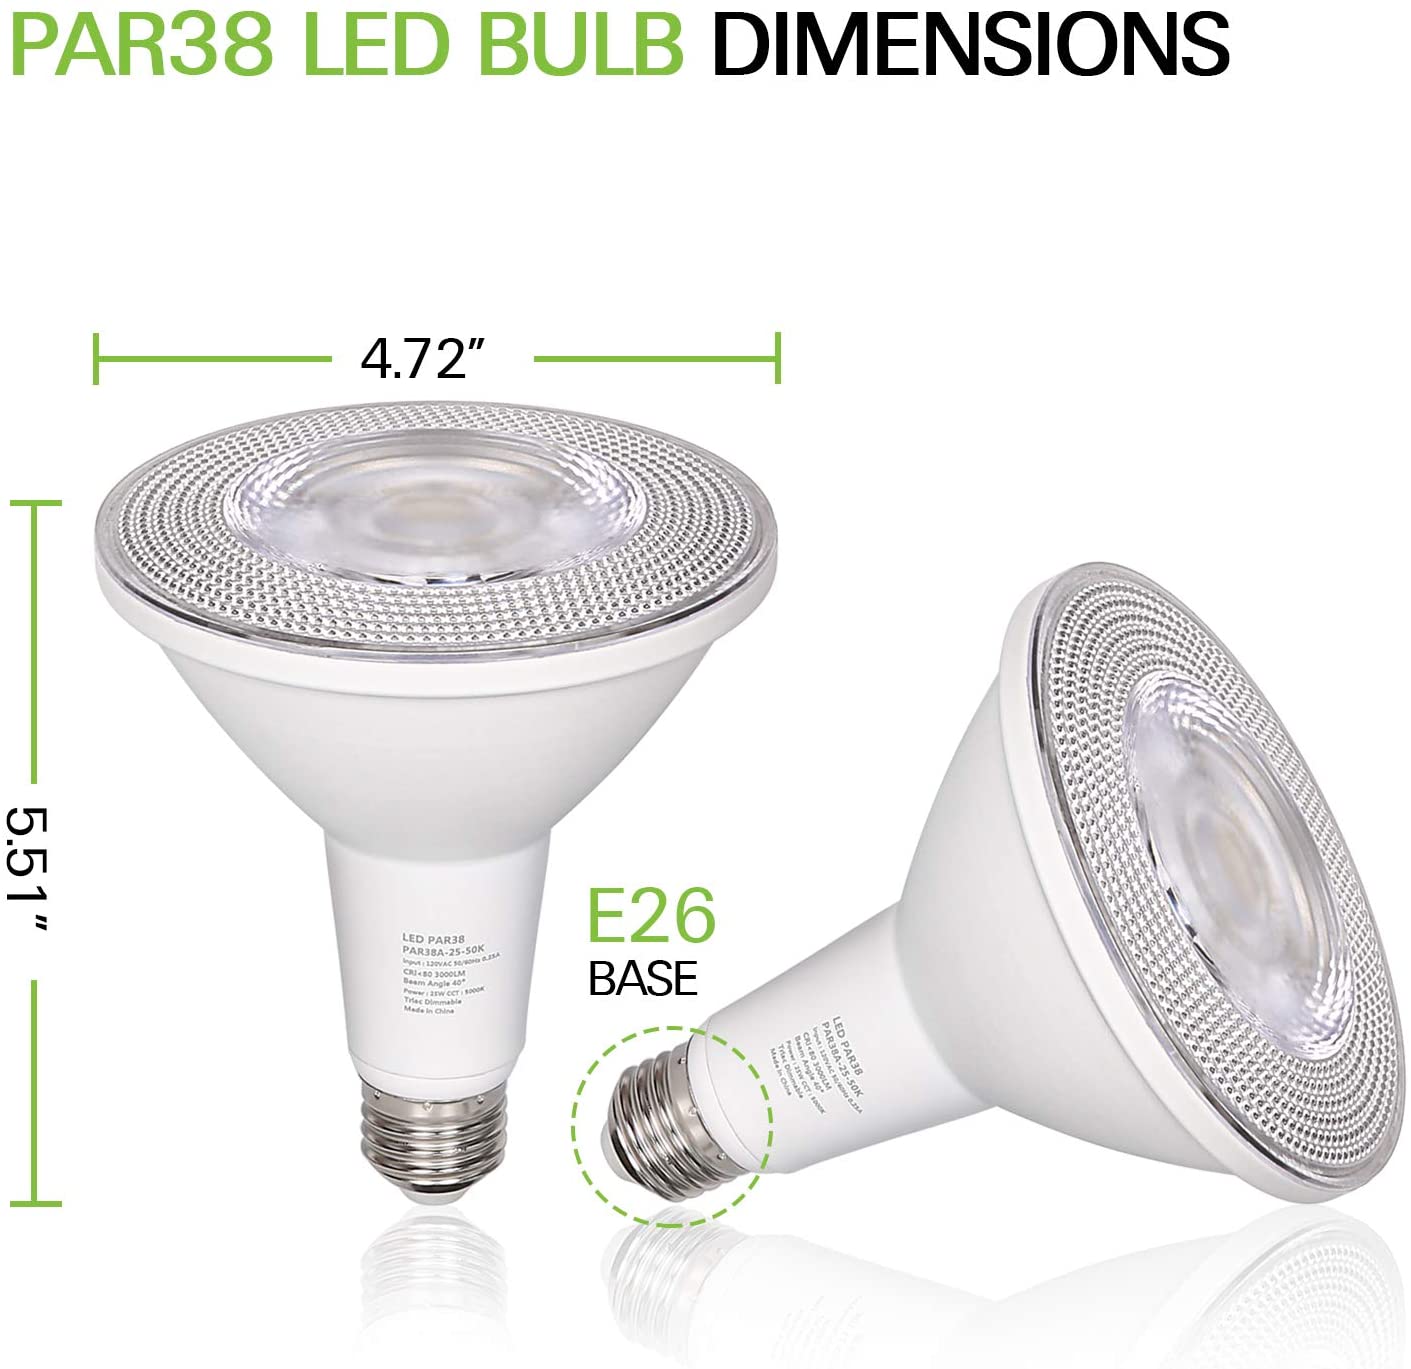 Pack Outdoor LED Flood Light Bulb, PAR38, 3000lm, 25W(300 Watt Equivalent),  Replacement for Halogen Flood Spot Light, Waterproof, Dimmable, 5000K  Daylight, E26 Base